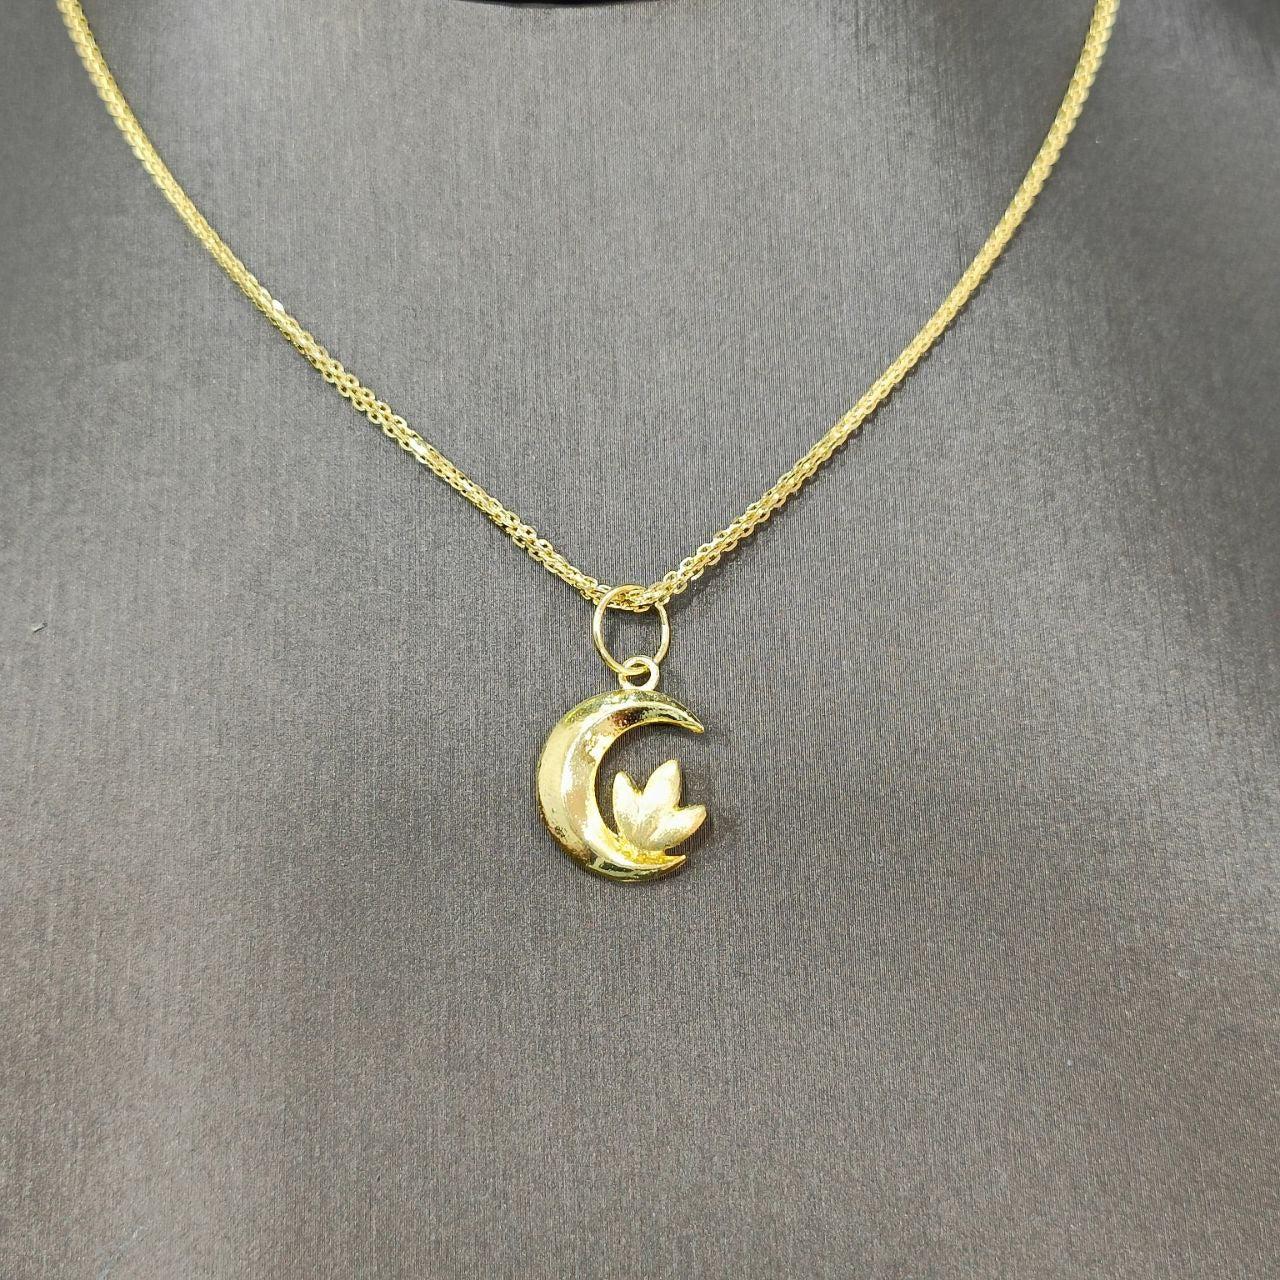 916 / 22k Gold Moon and Flower Pendant-Charms & Pendants-Best Gold Shop